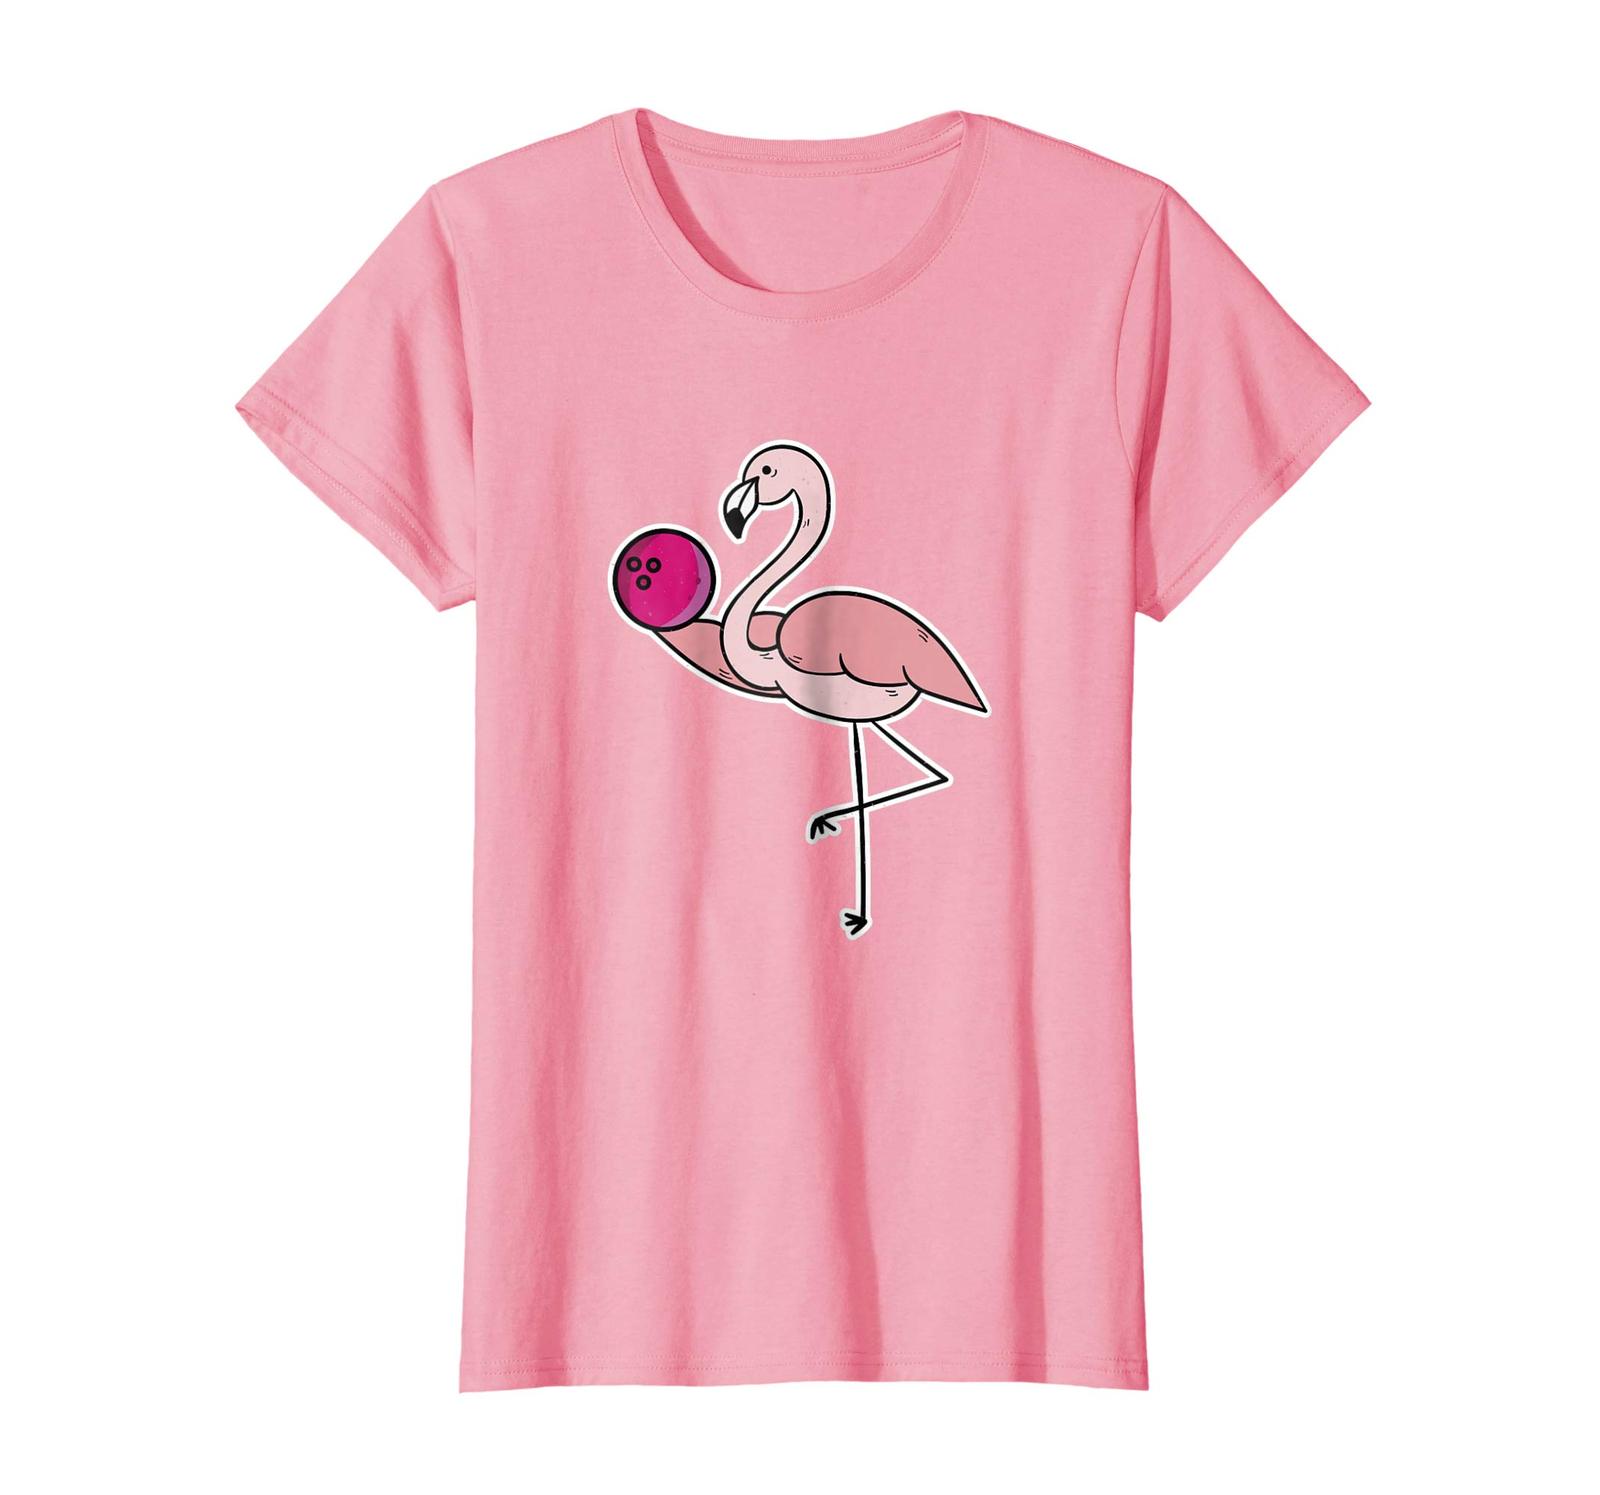 Funny Tee - Flamingo Pink Bowling Ball - Funny Bowl T-Shirt Wowen - Tops